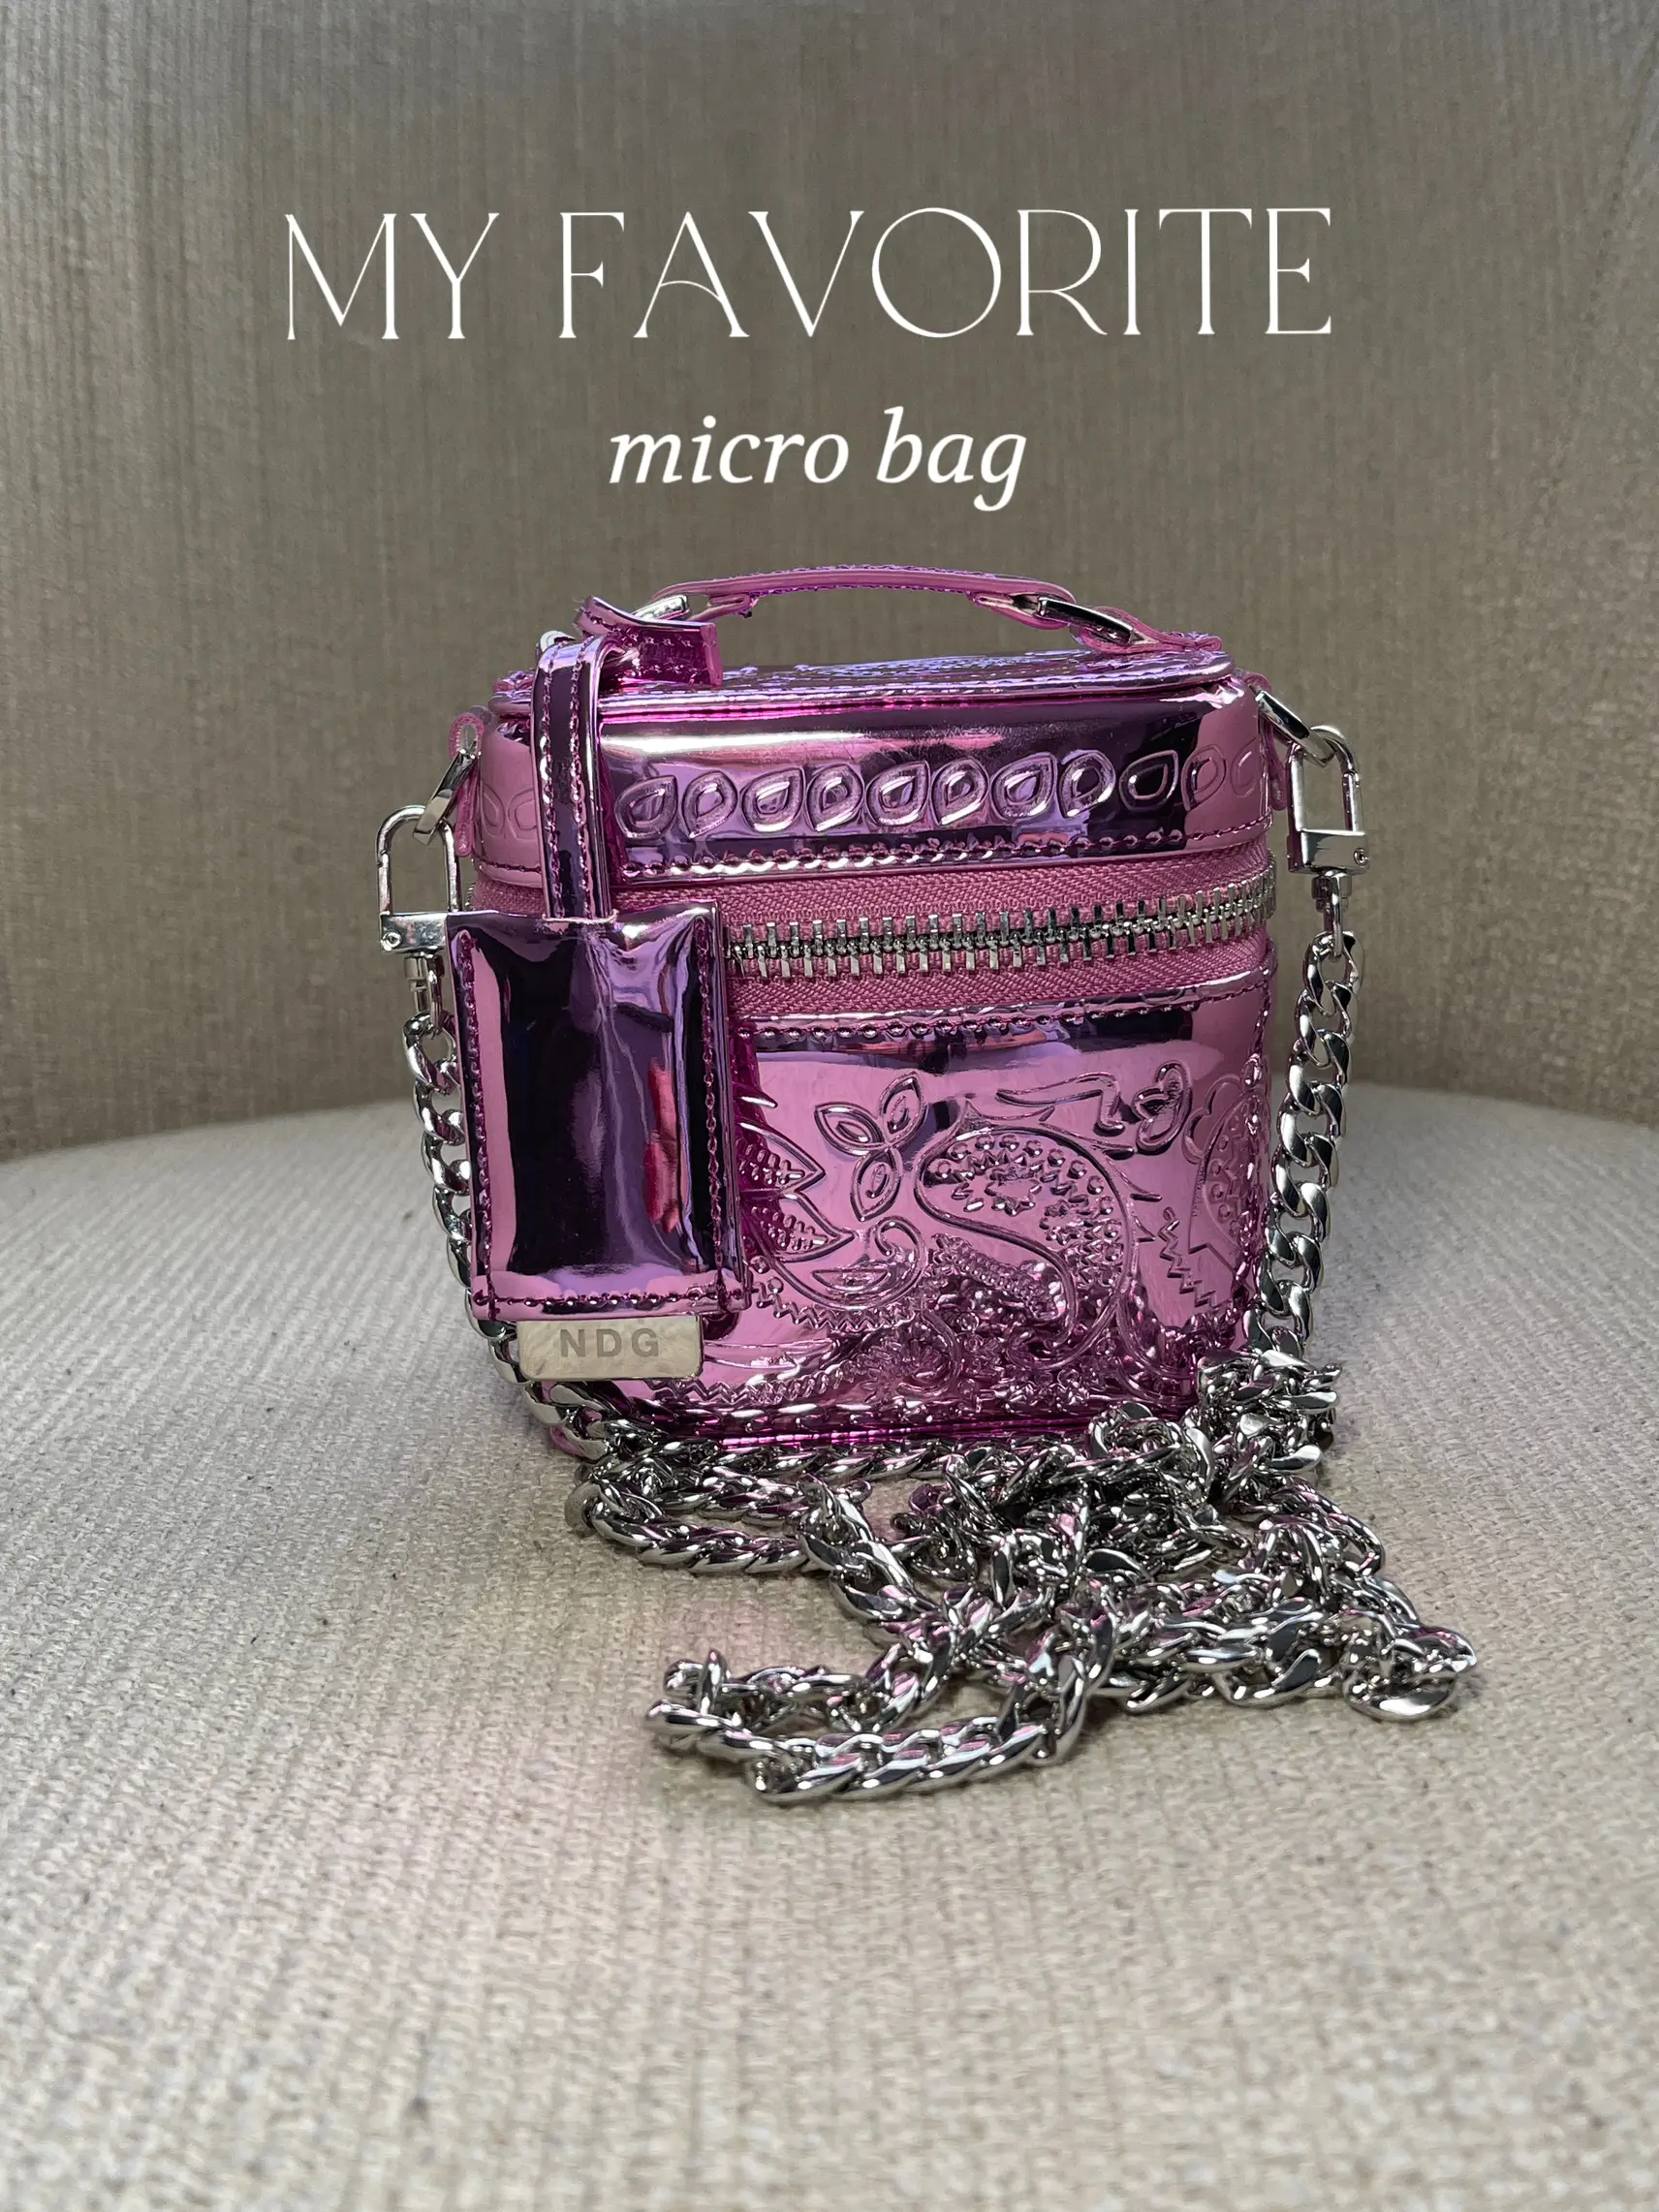 she's so cute 🥹 micro purse in sage 🌿 @emcosmetics